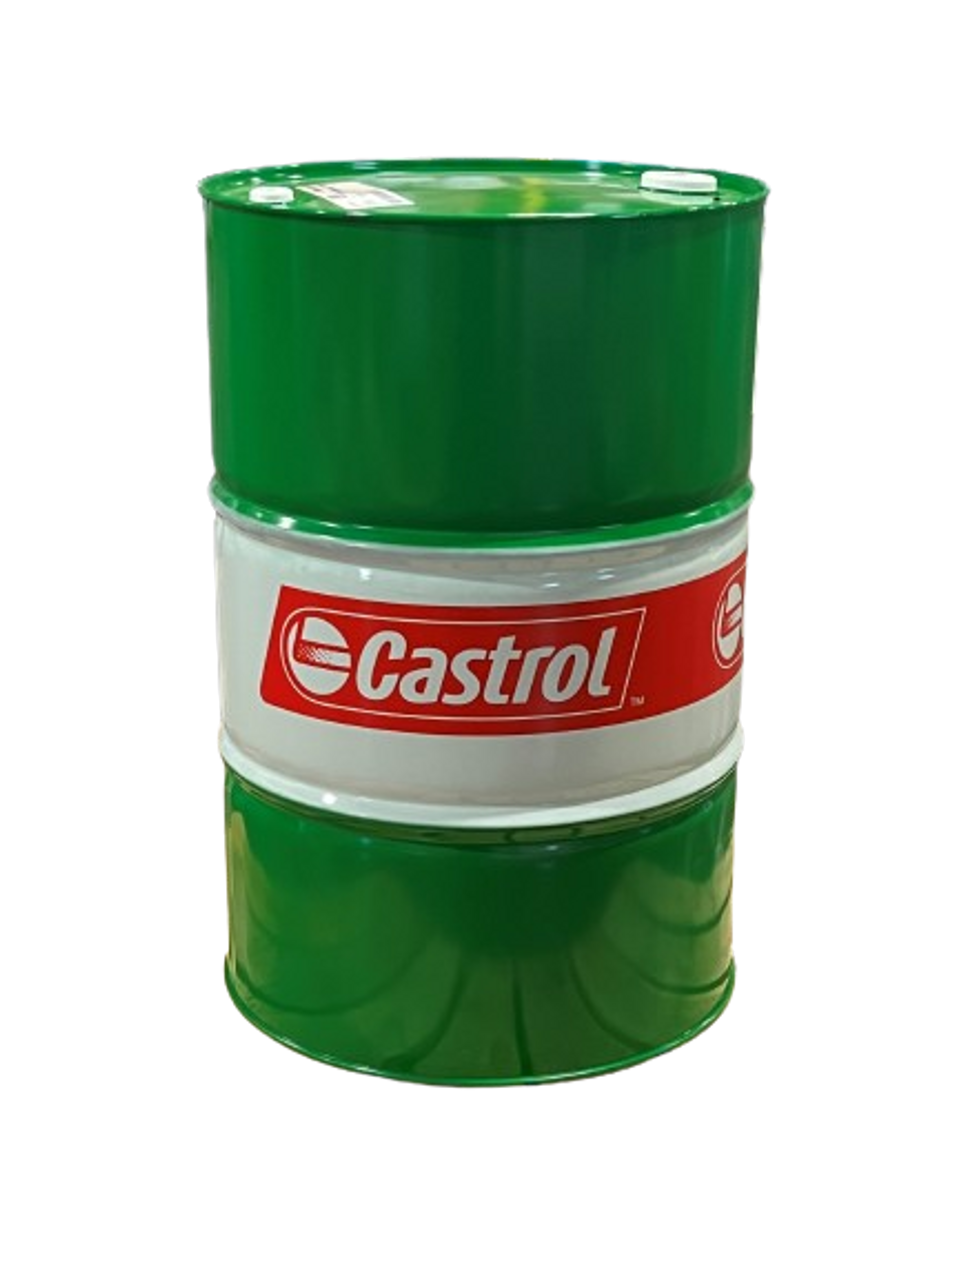 Castrol Brayco 300 Low Temperate Lubricating Oil 55 Gallon Drum